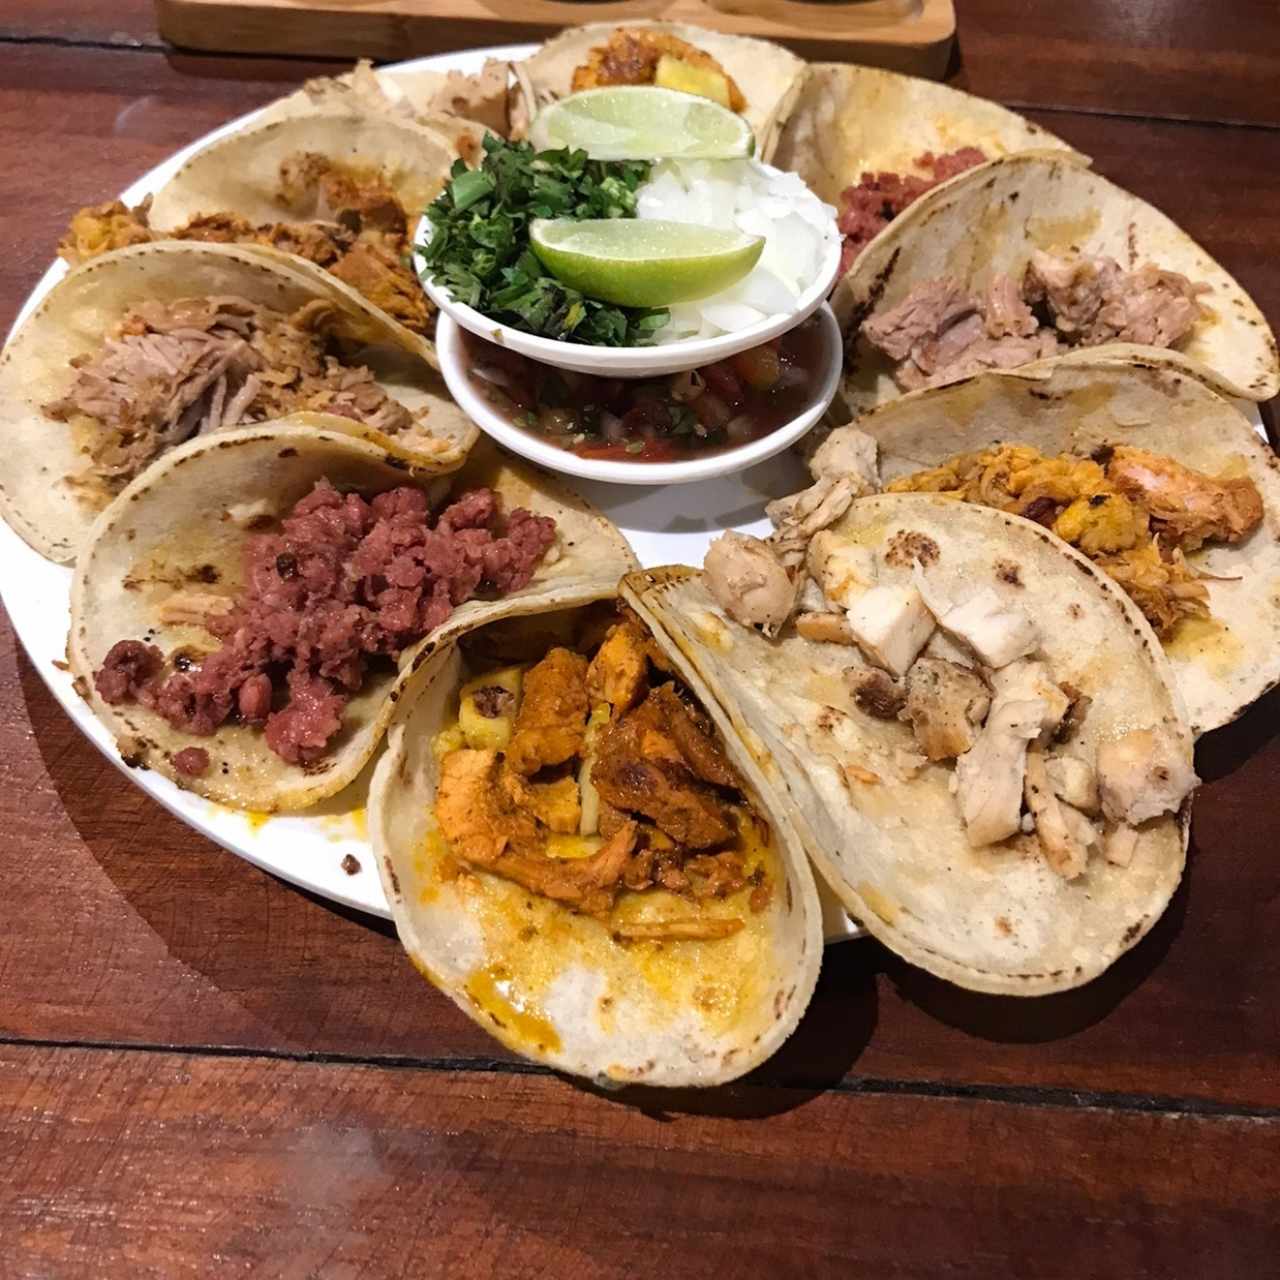 Taco Fiesta